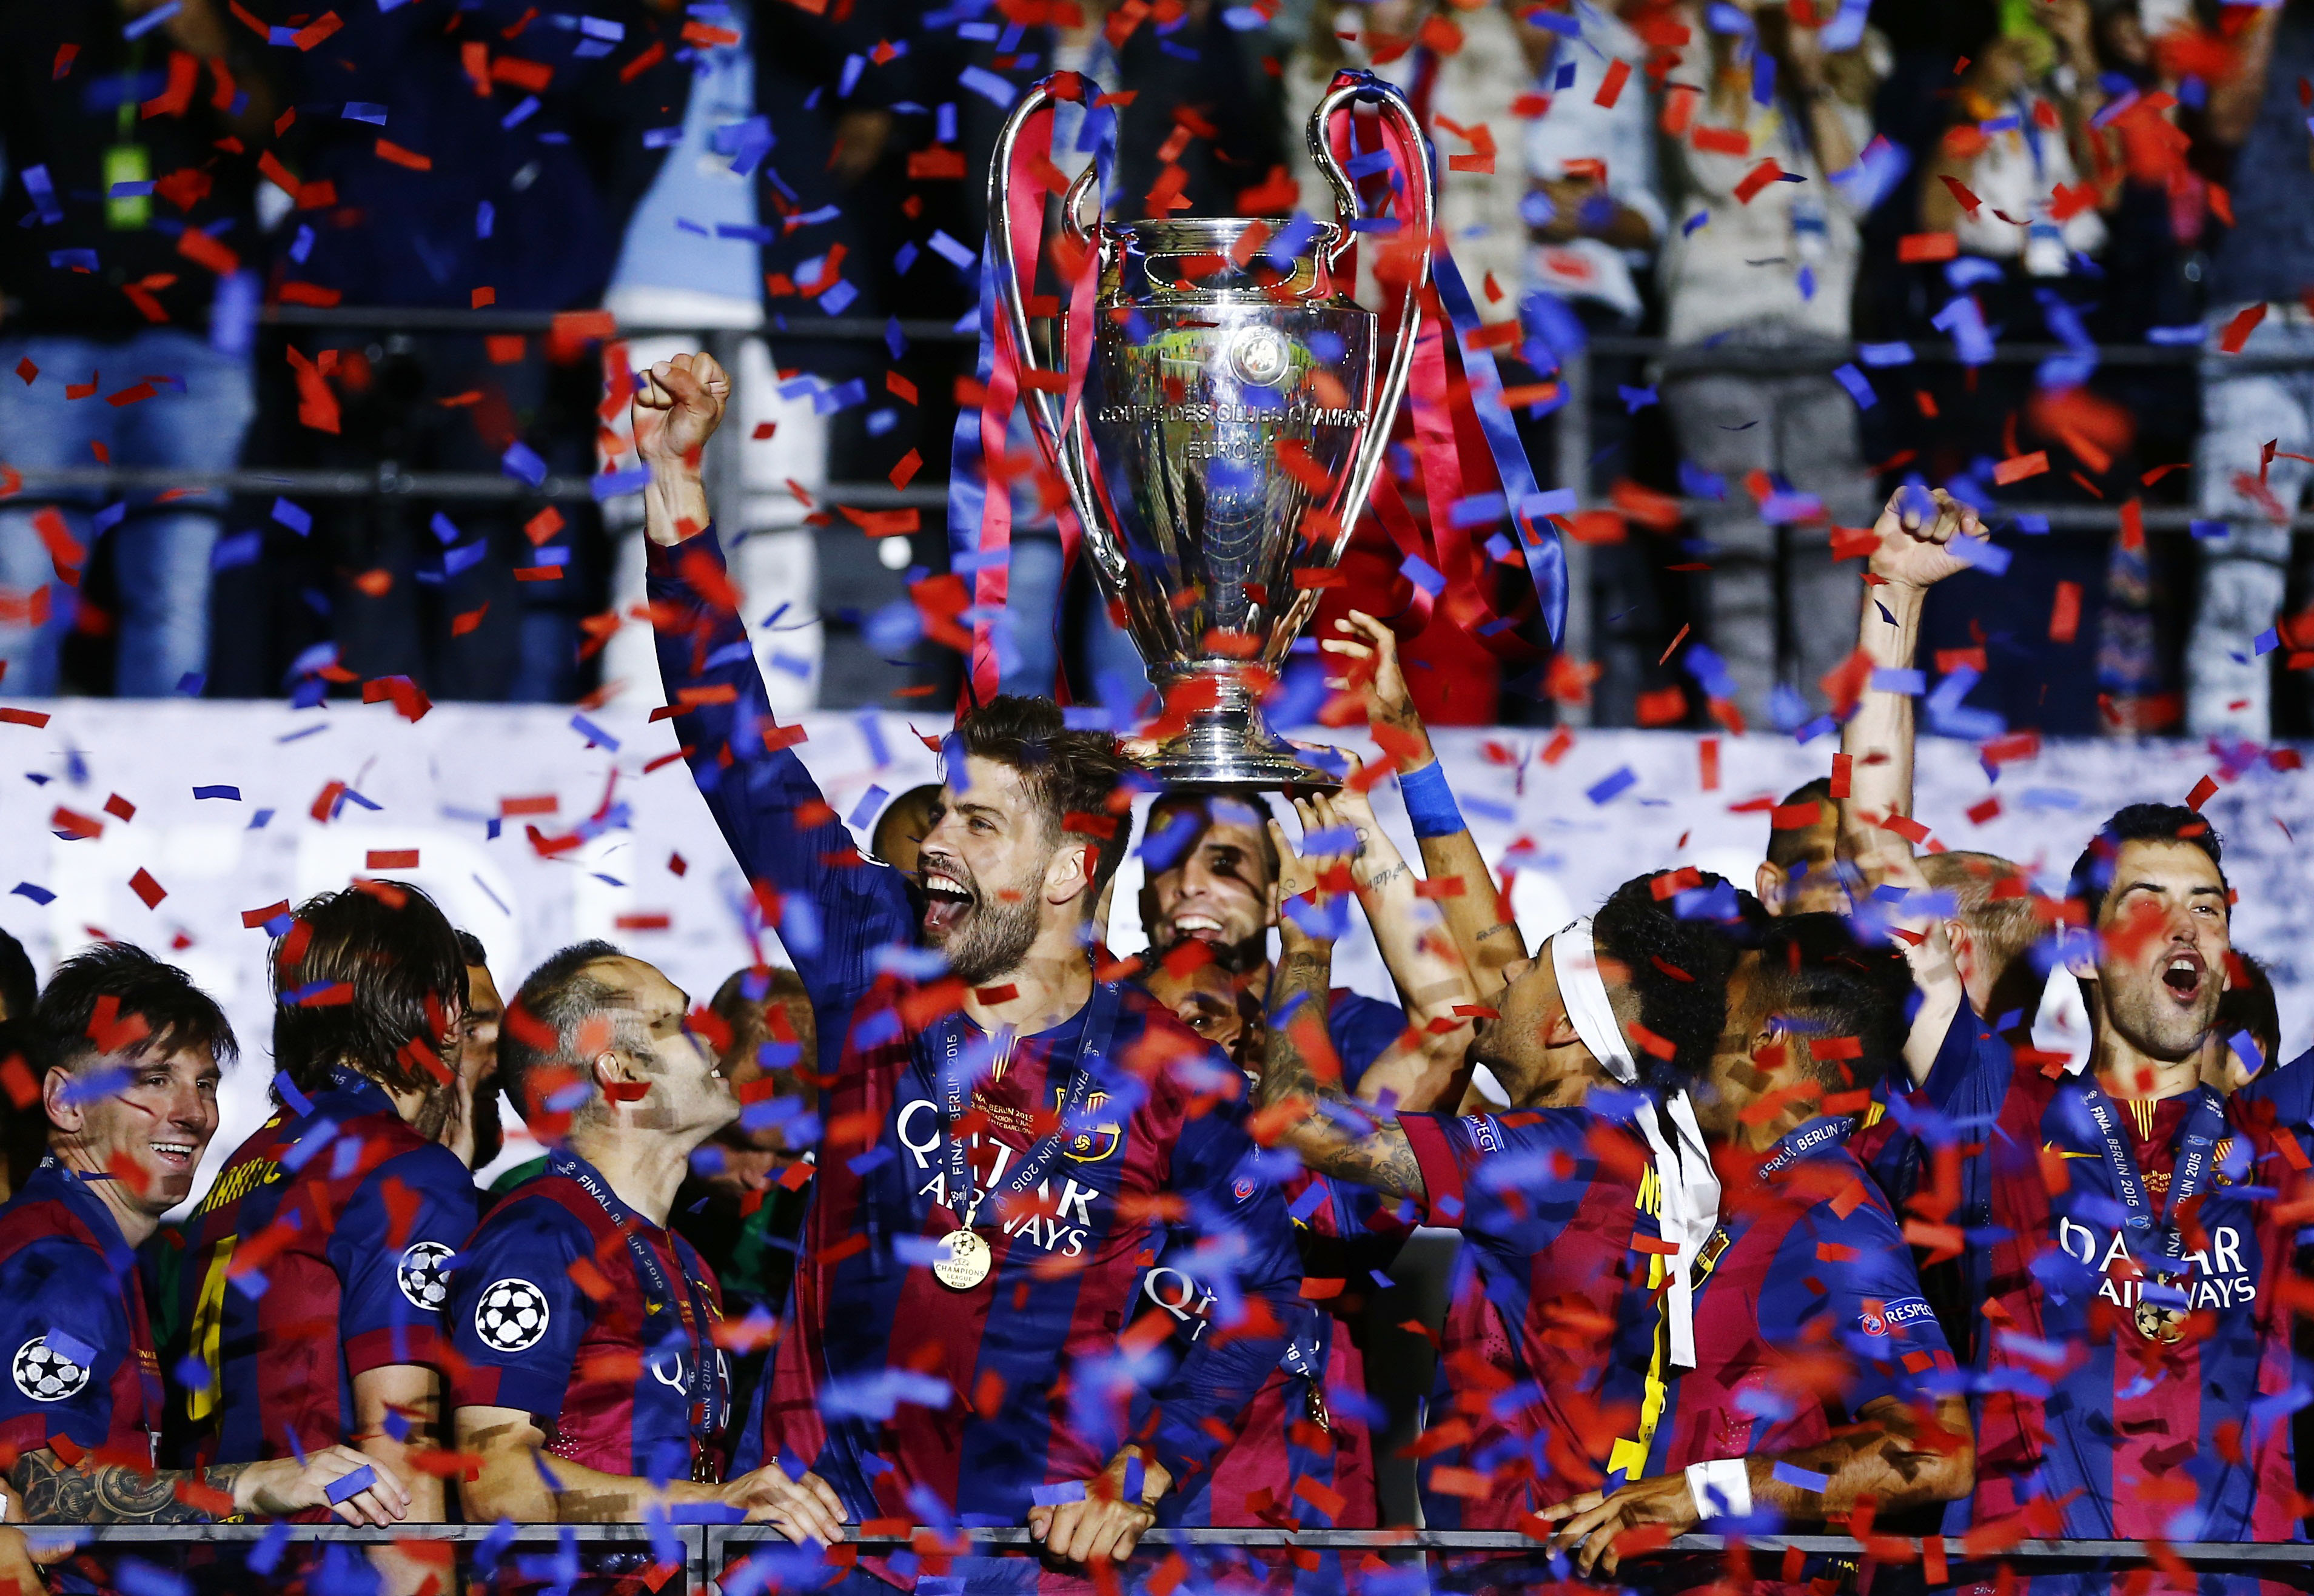 Barca cap great season with fifth European Cup win